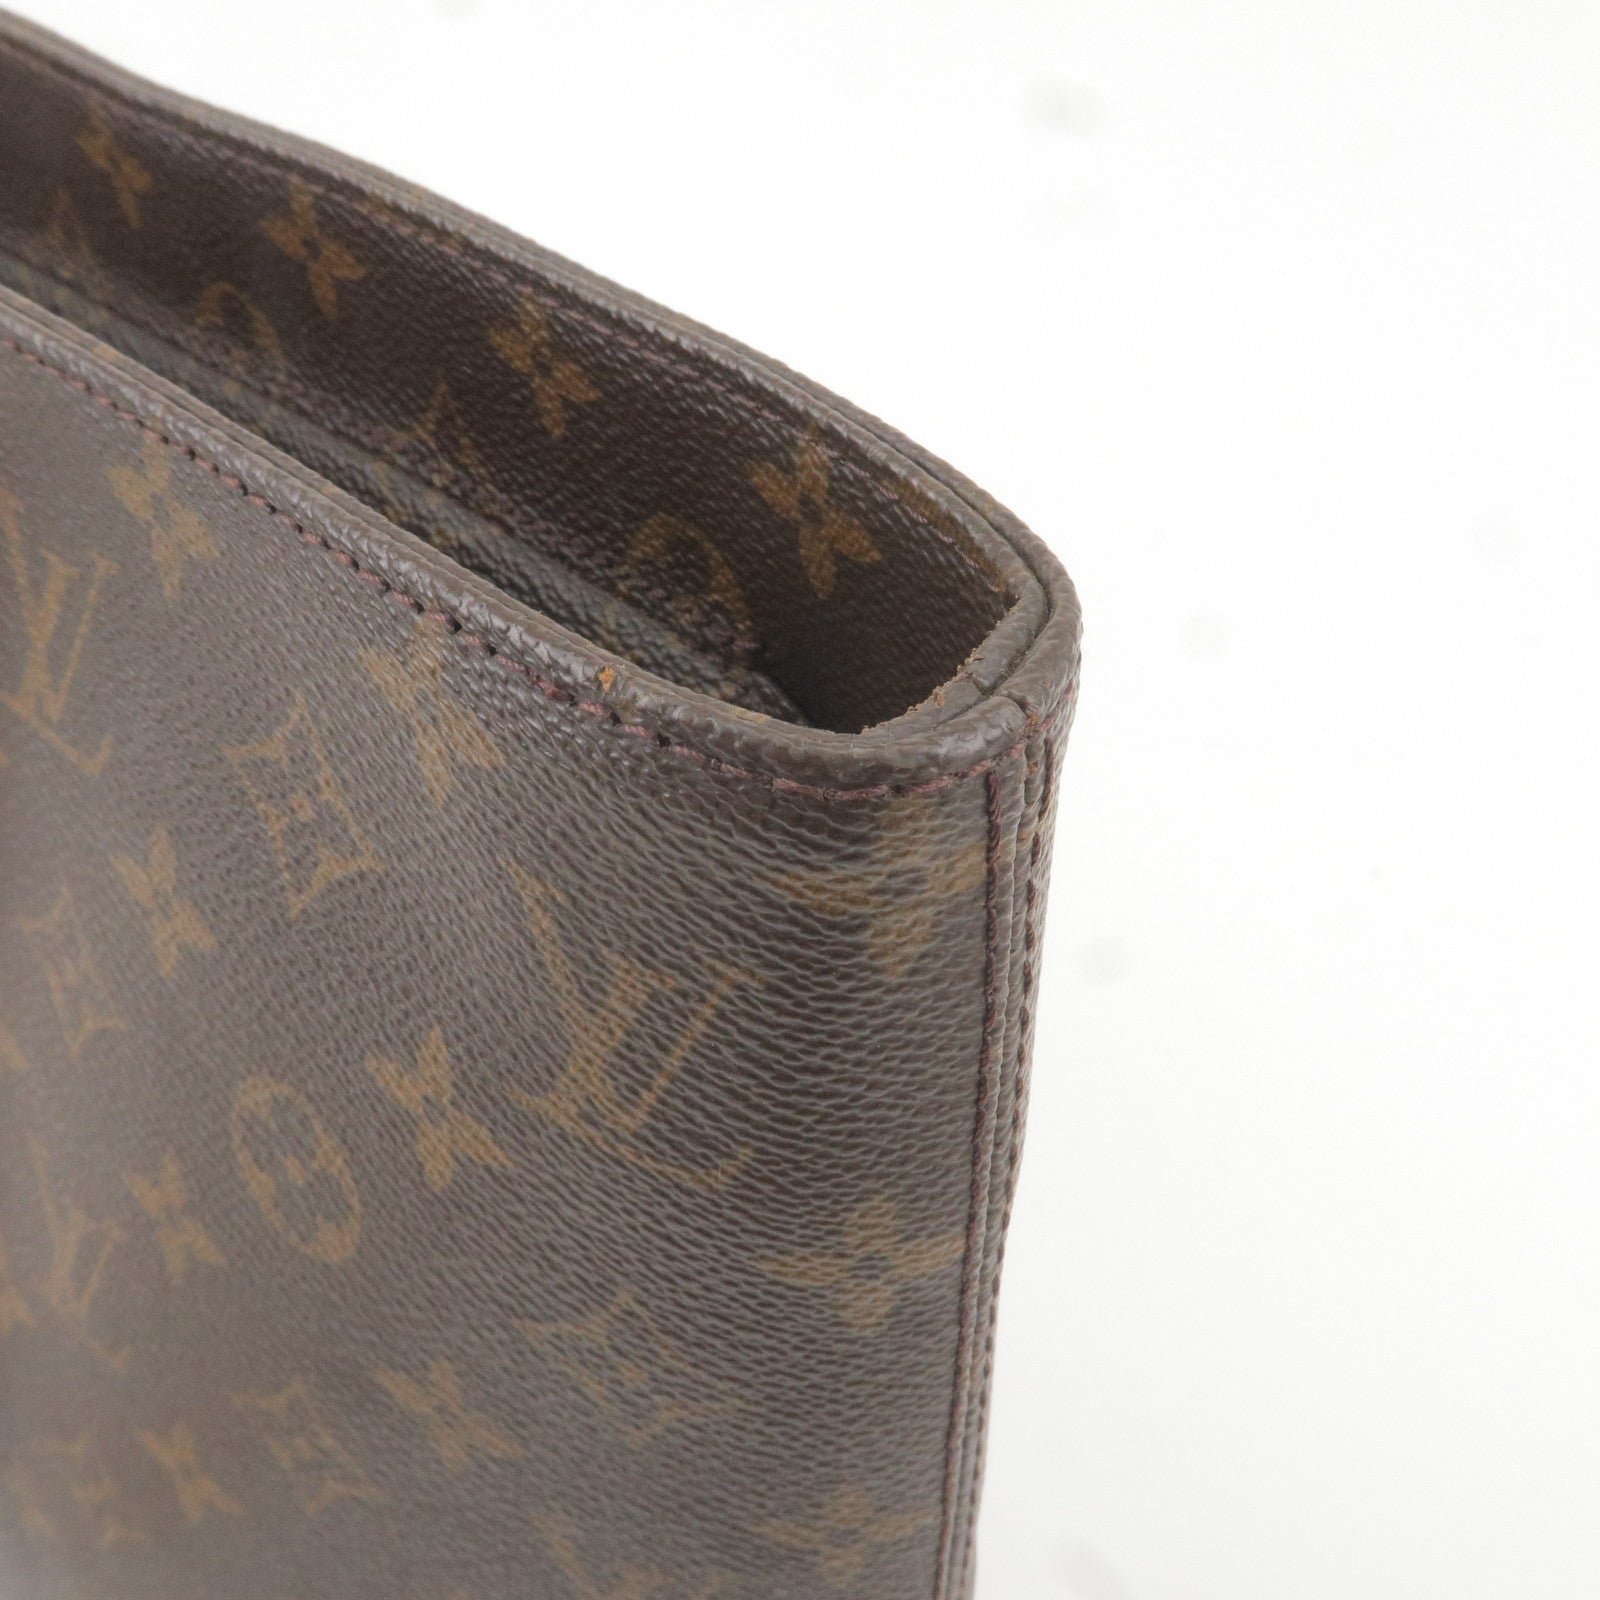 A Louis Vuitton Special Review feat. a LV wallet & LV x Travis